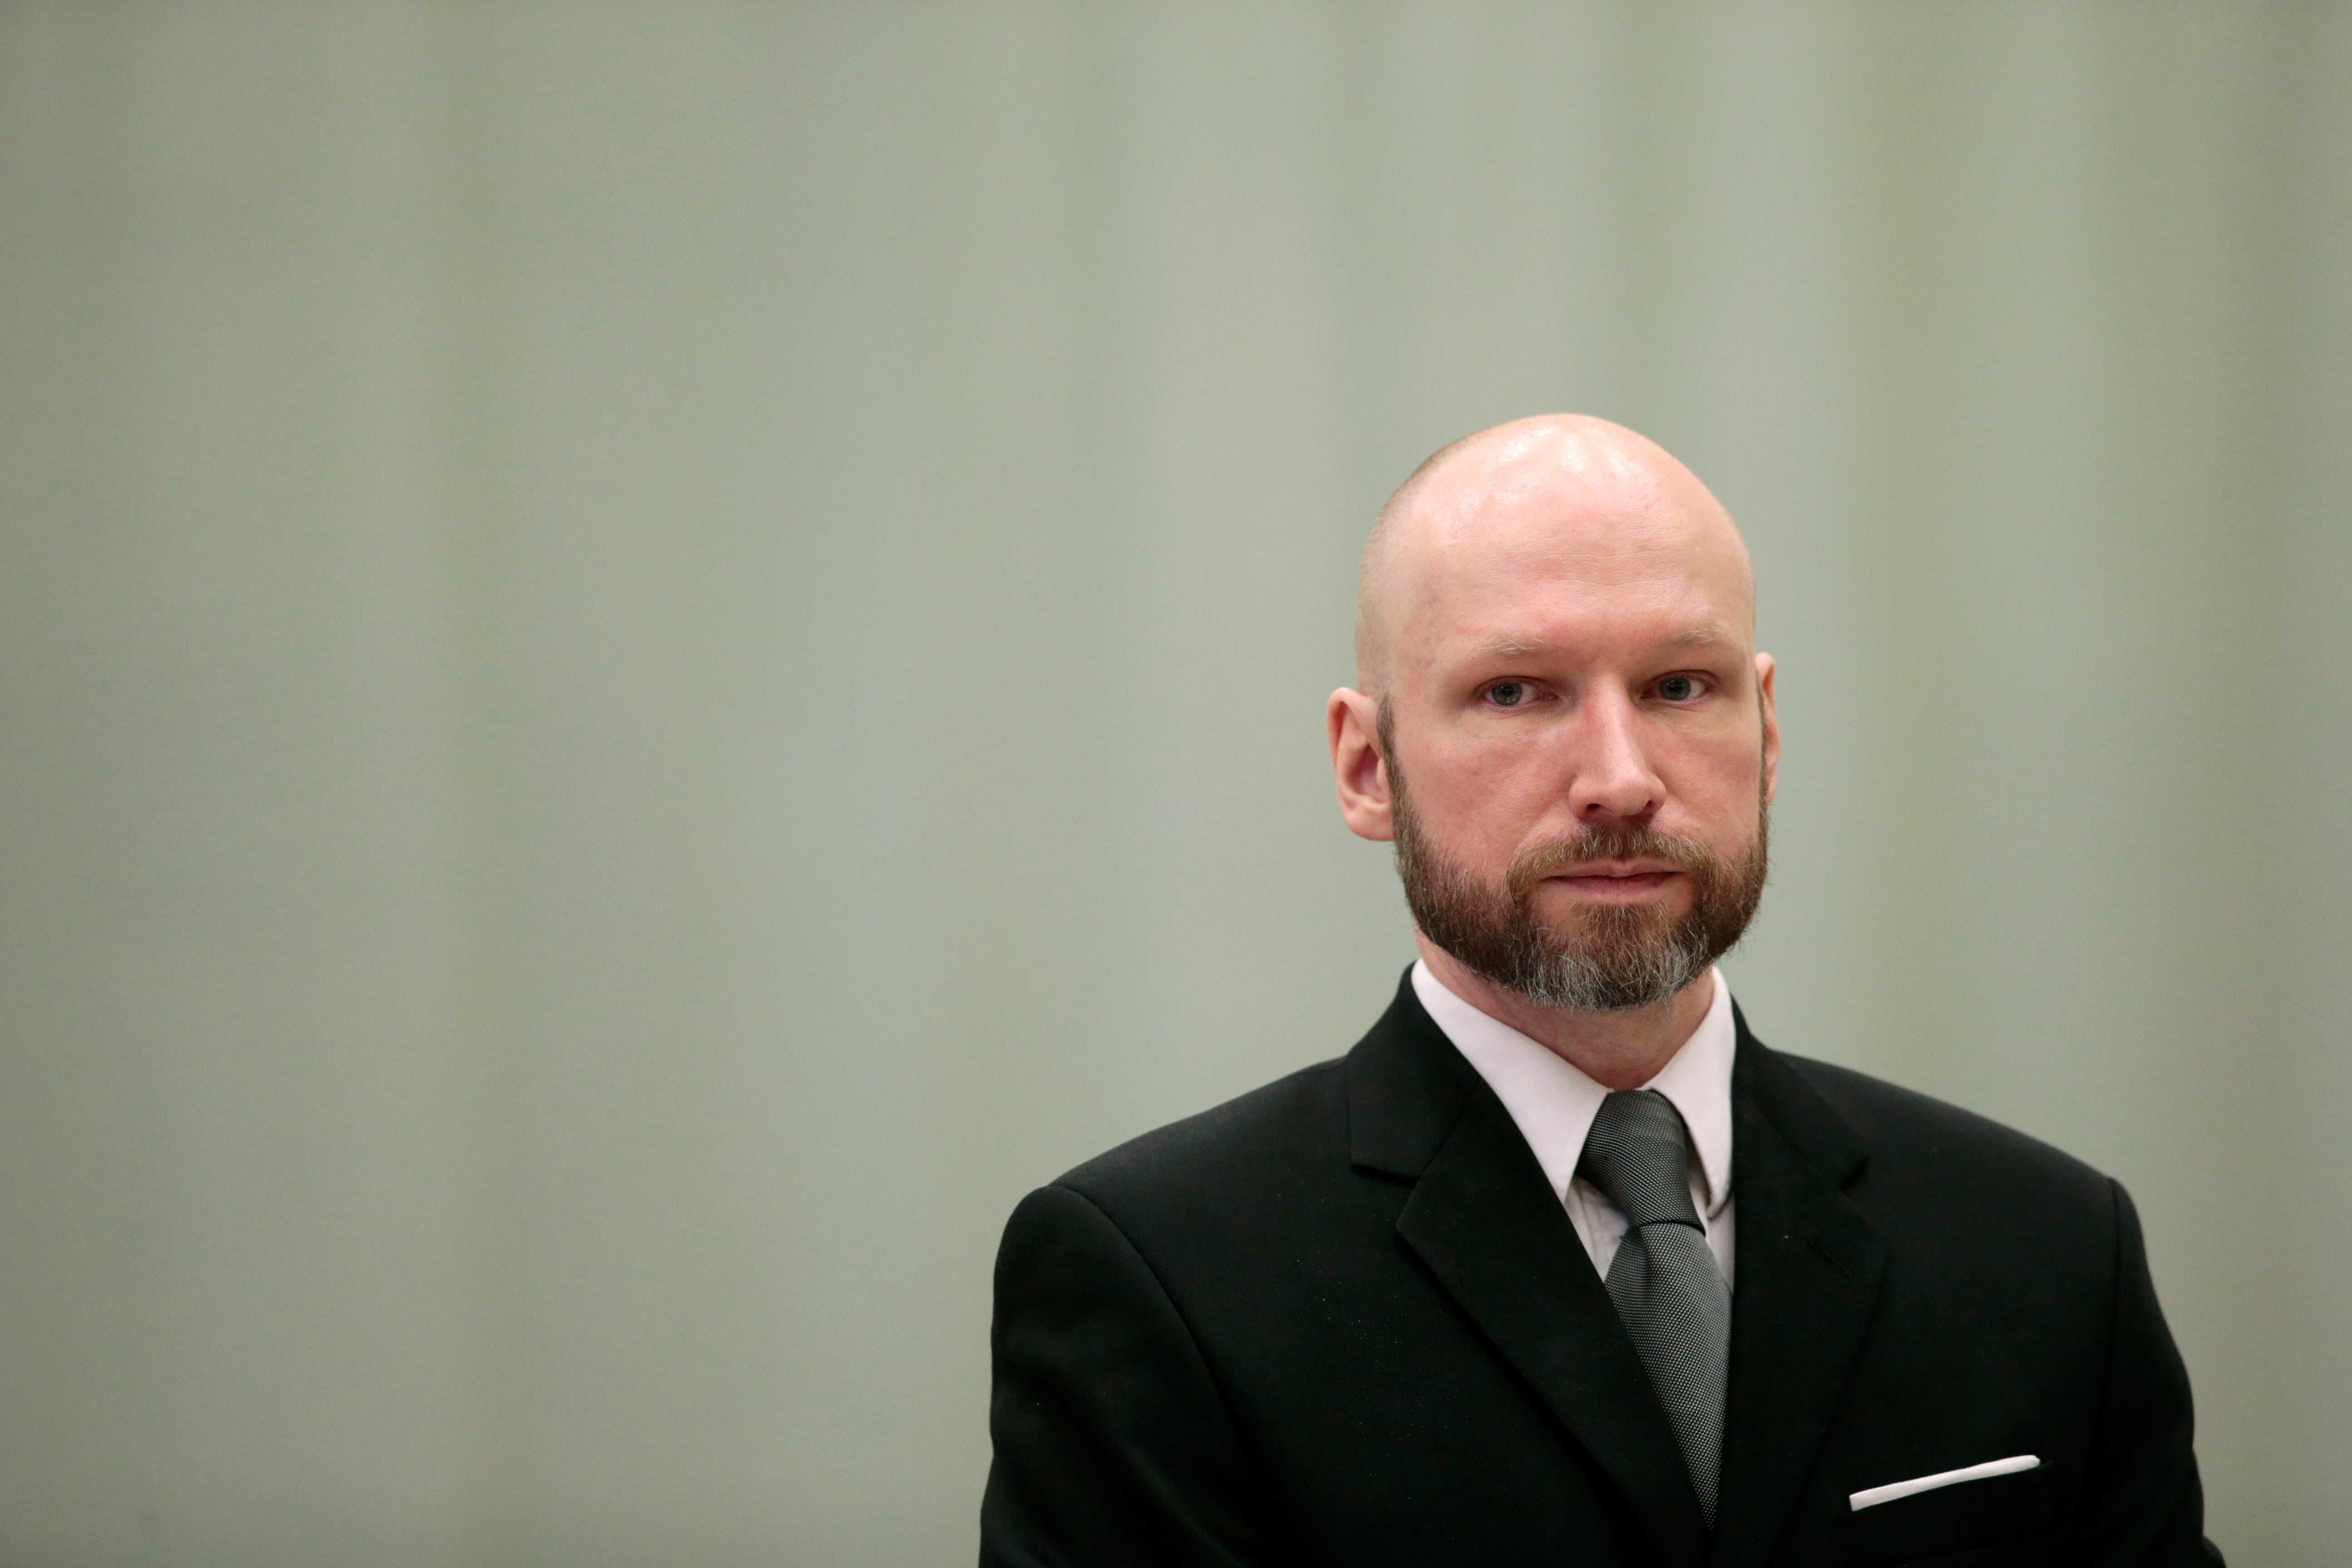 Convicted Norwegian mass murderer Anders Behring Breivik has expressed admiration for Mr Wilders